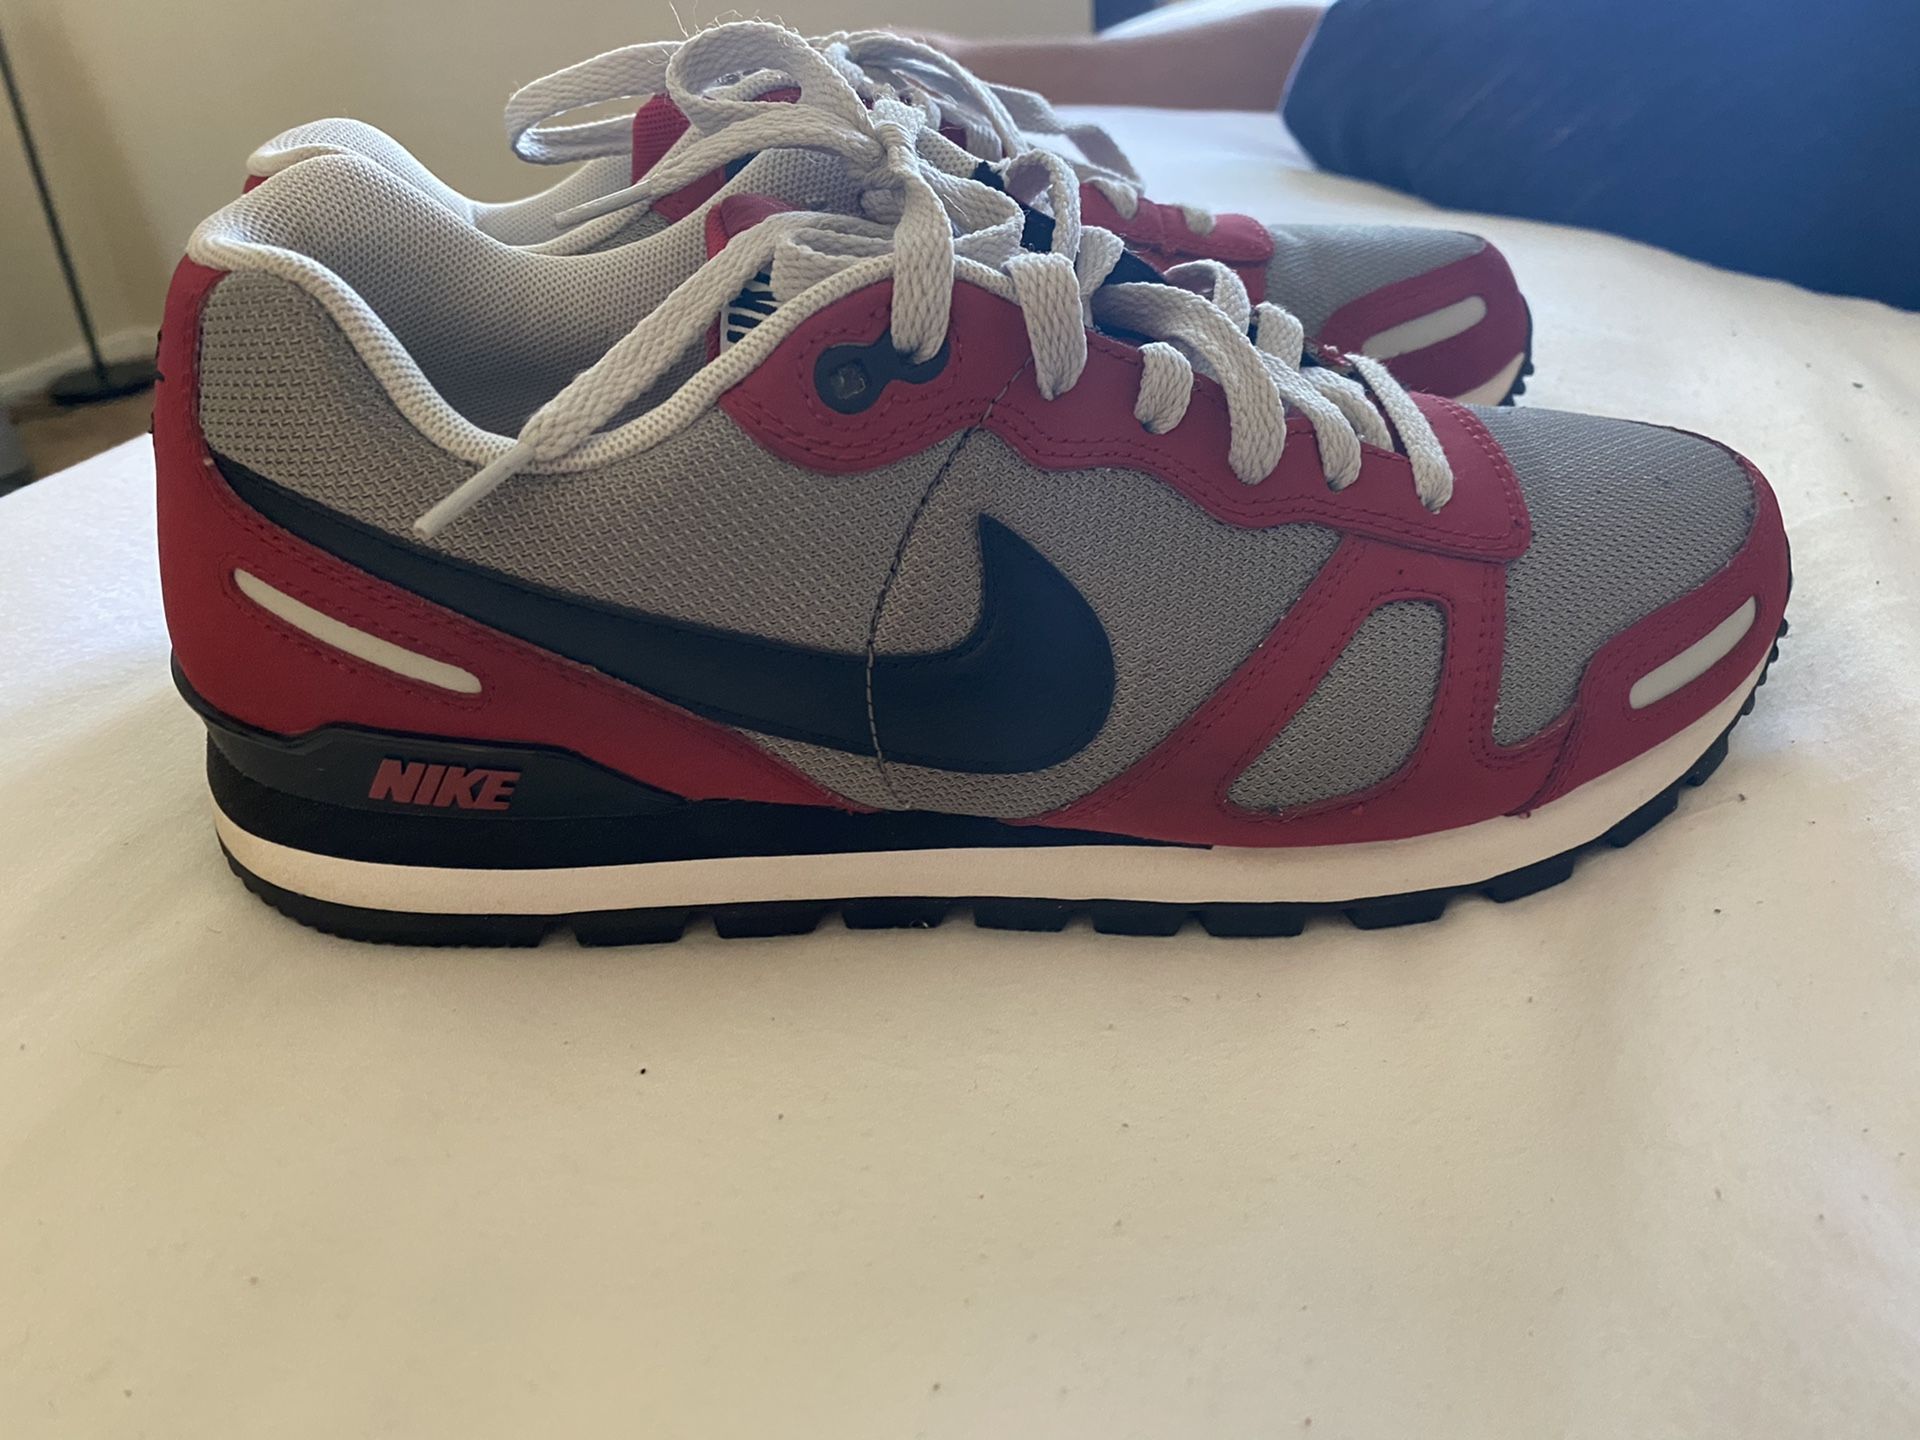 Men’s Nike Shoe size 9.5